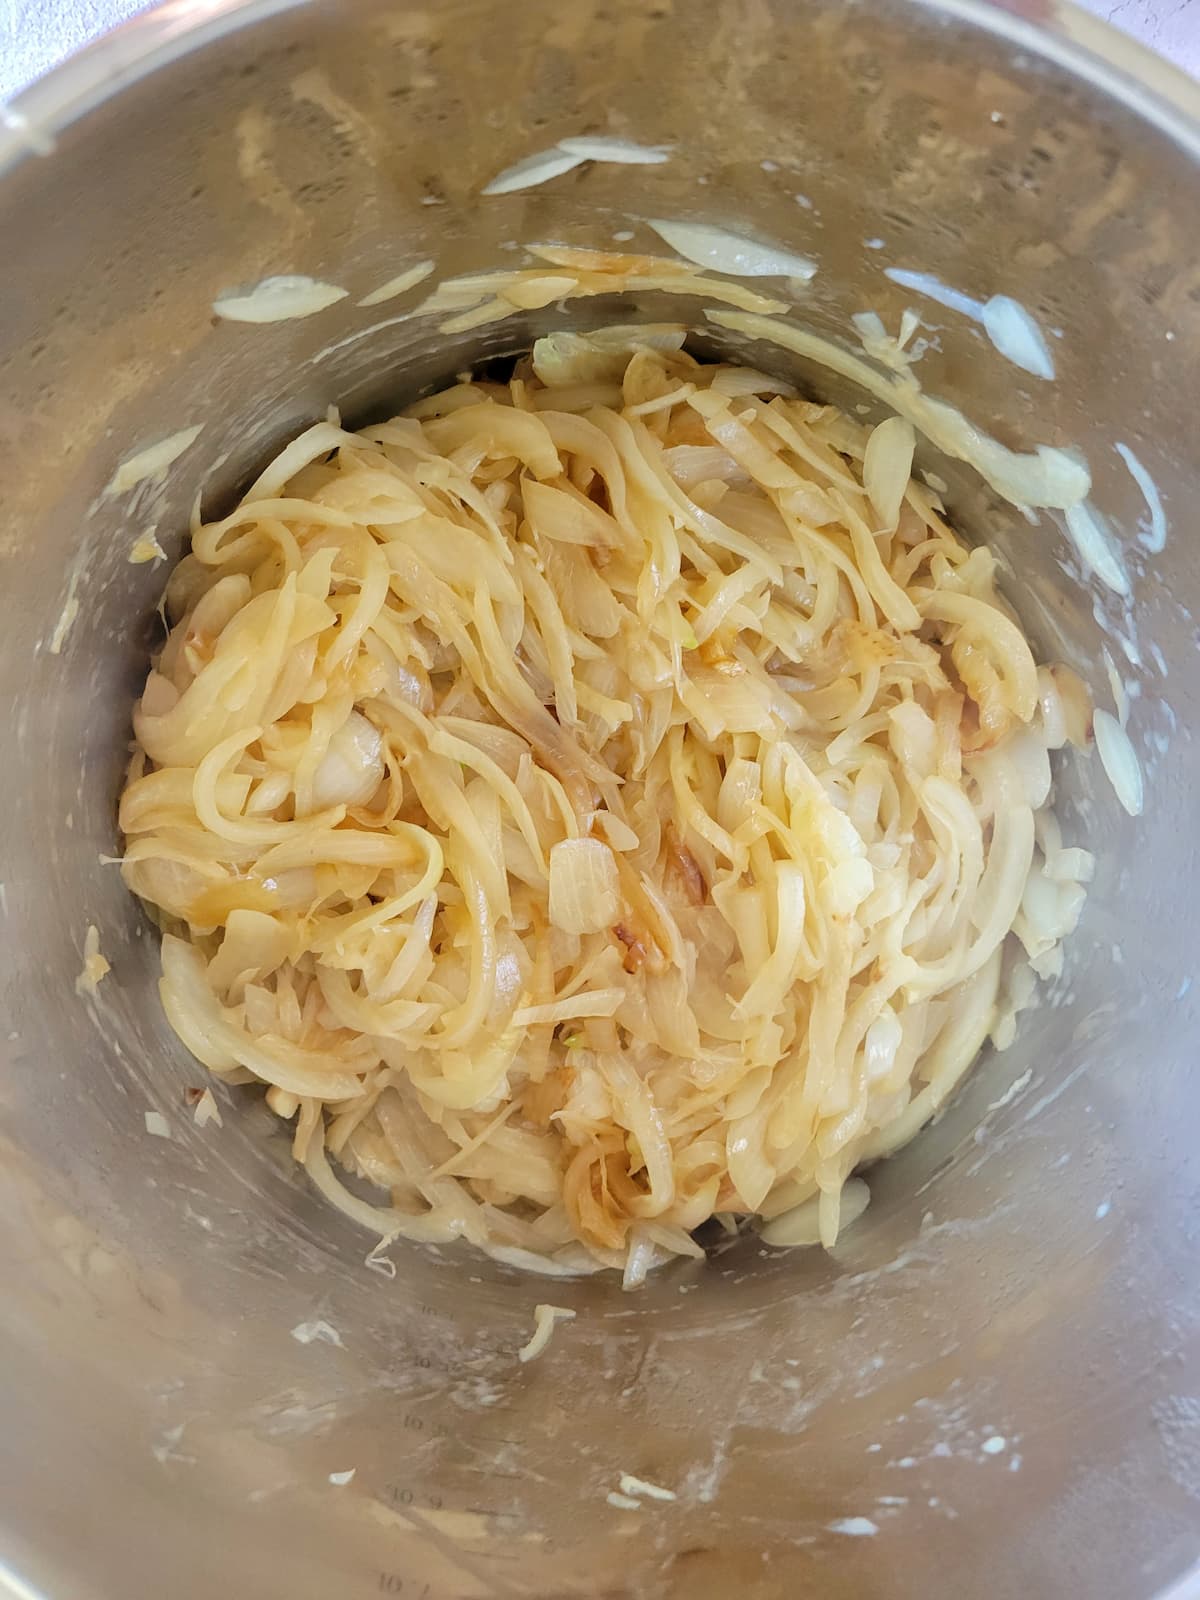 sautéed/caramelized onions in a pot